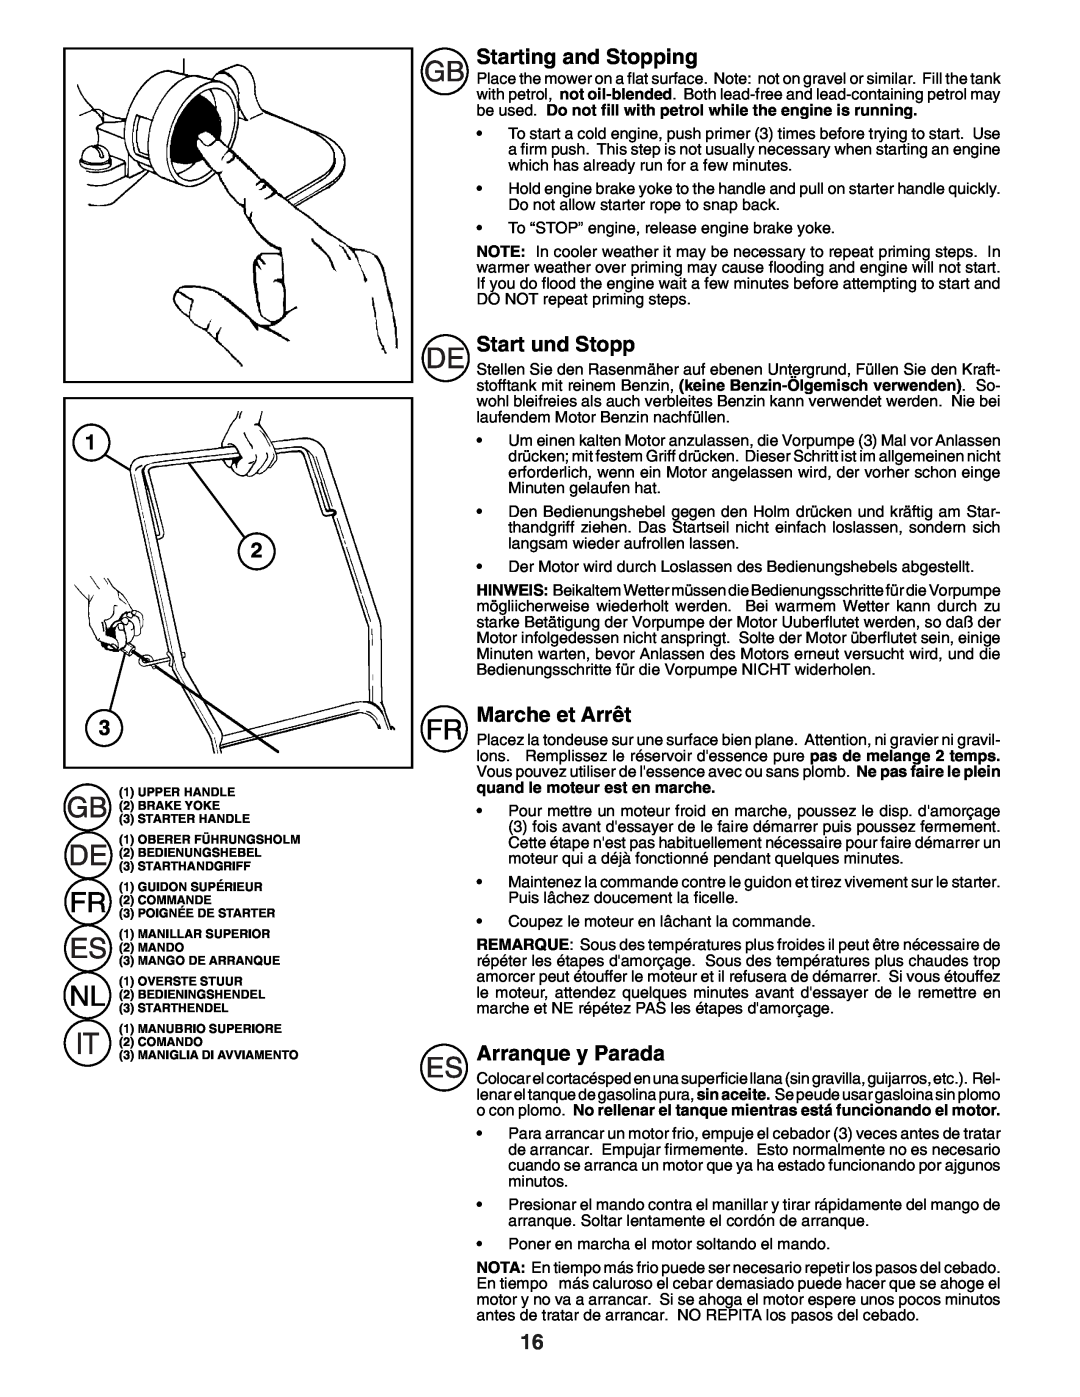 Husqvarna R152SVB instruction manual Starting and Stopping, Start und Stopp, Marche et Arrêt, Arranque y Parada 